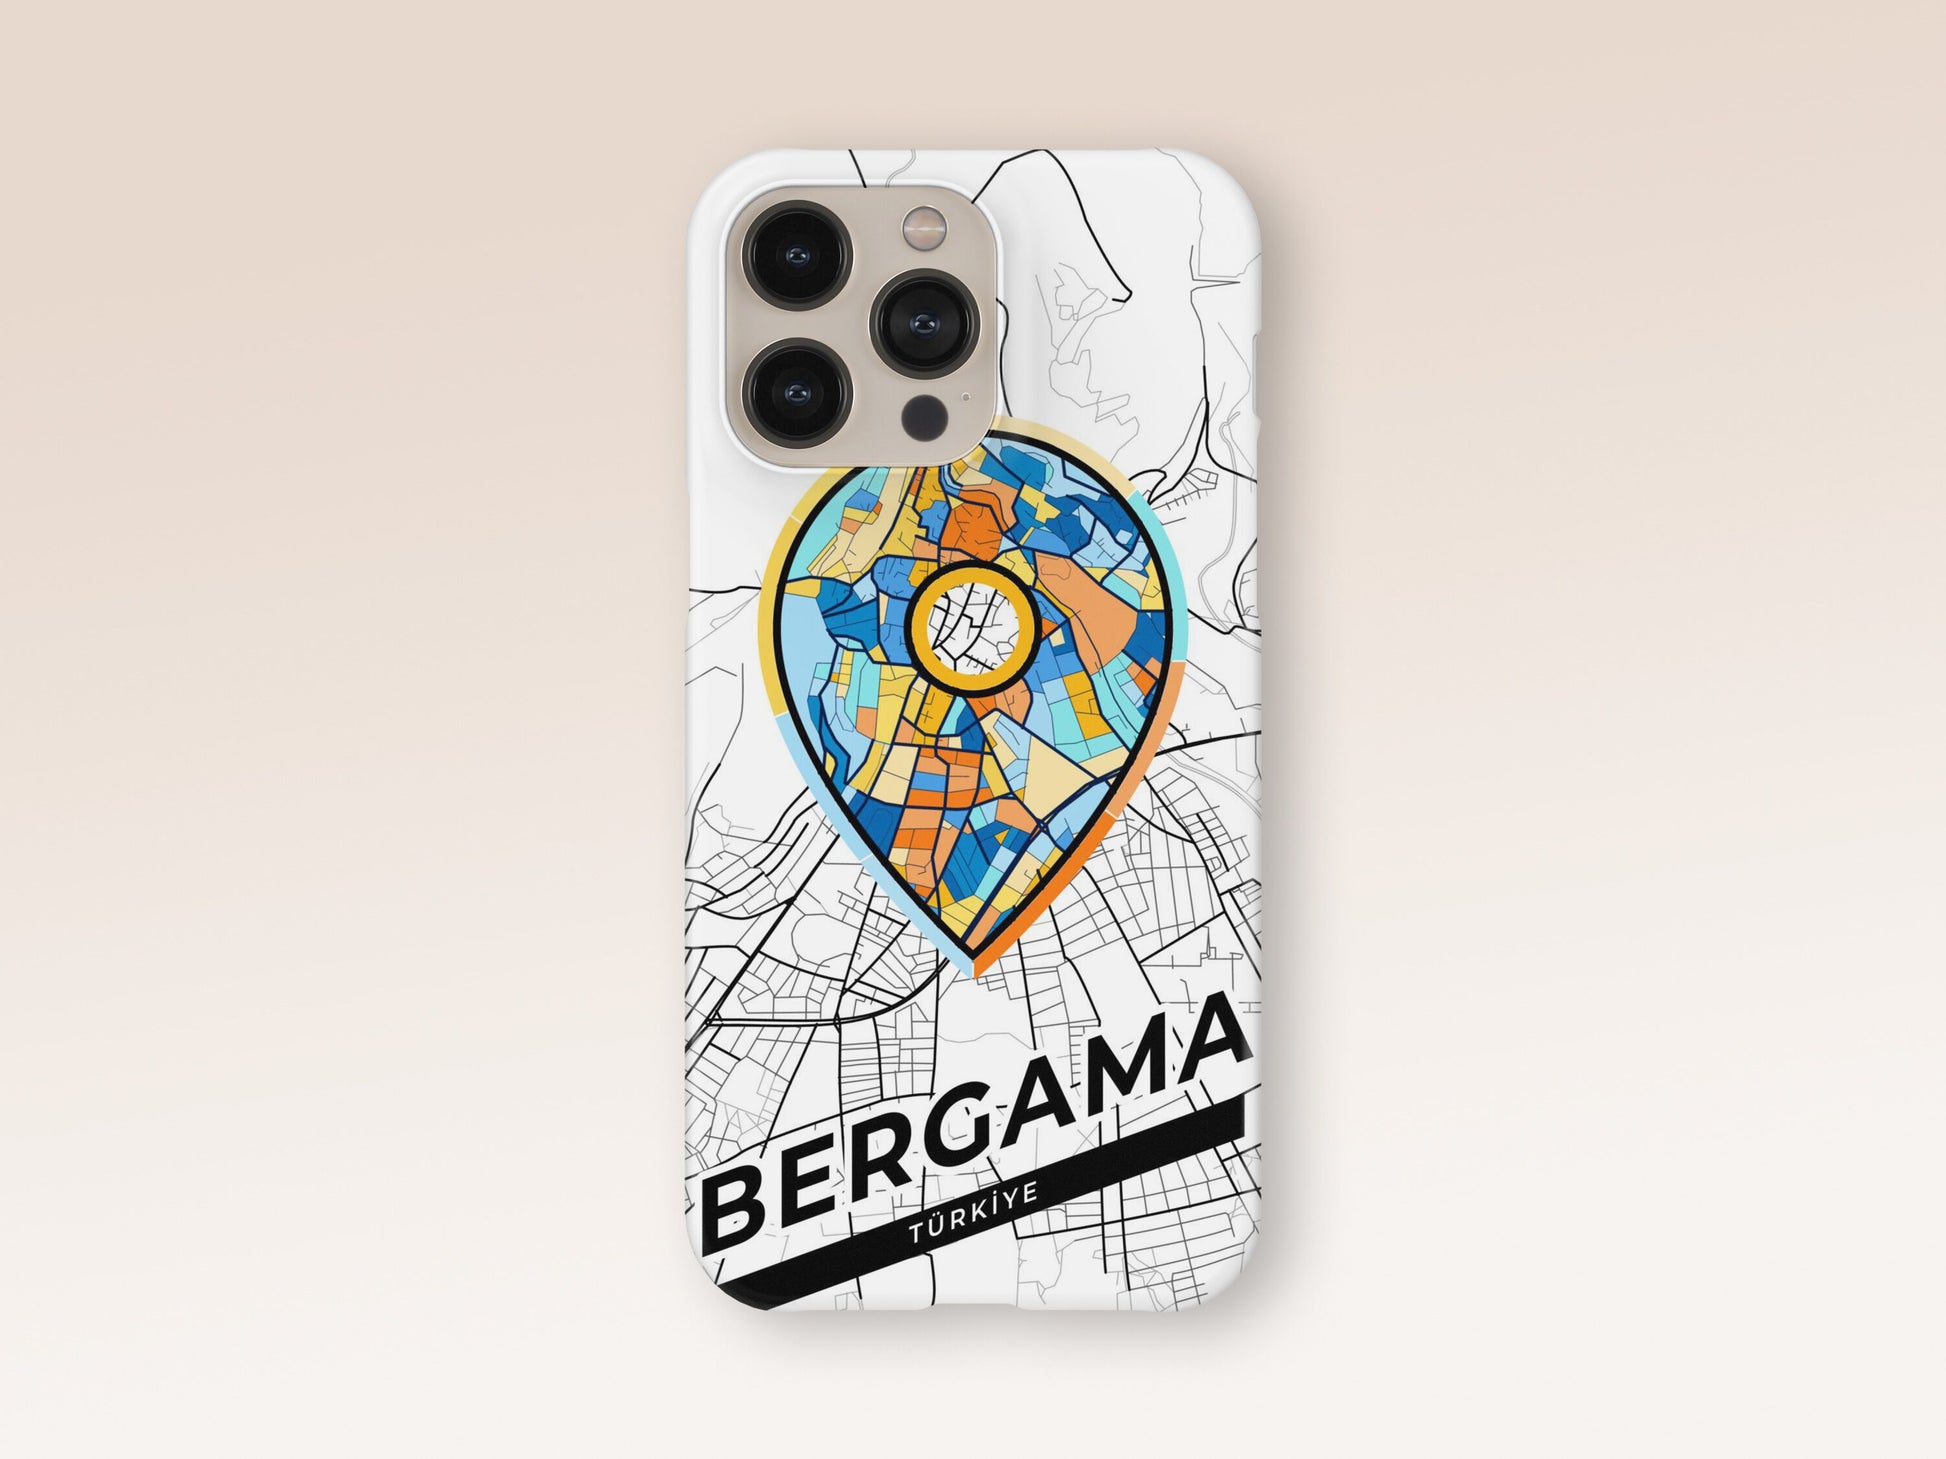 Bergama Turkey slim phone case with colorful icon. Birthday, wedding or housewarming gift. Couple match cases. 1